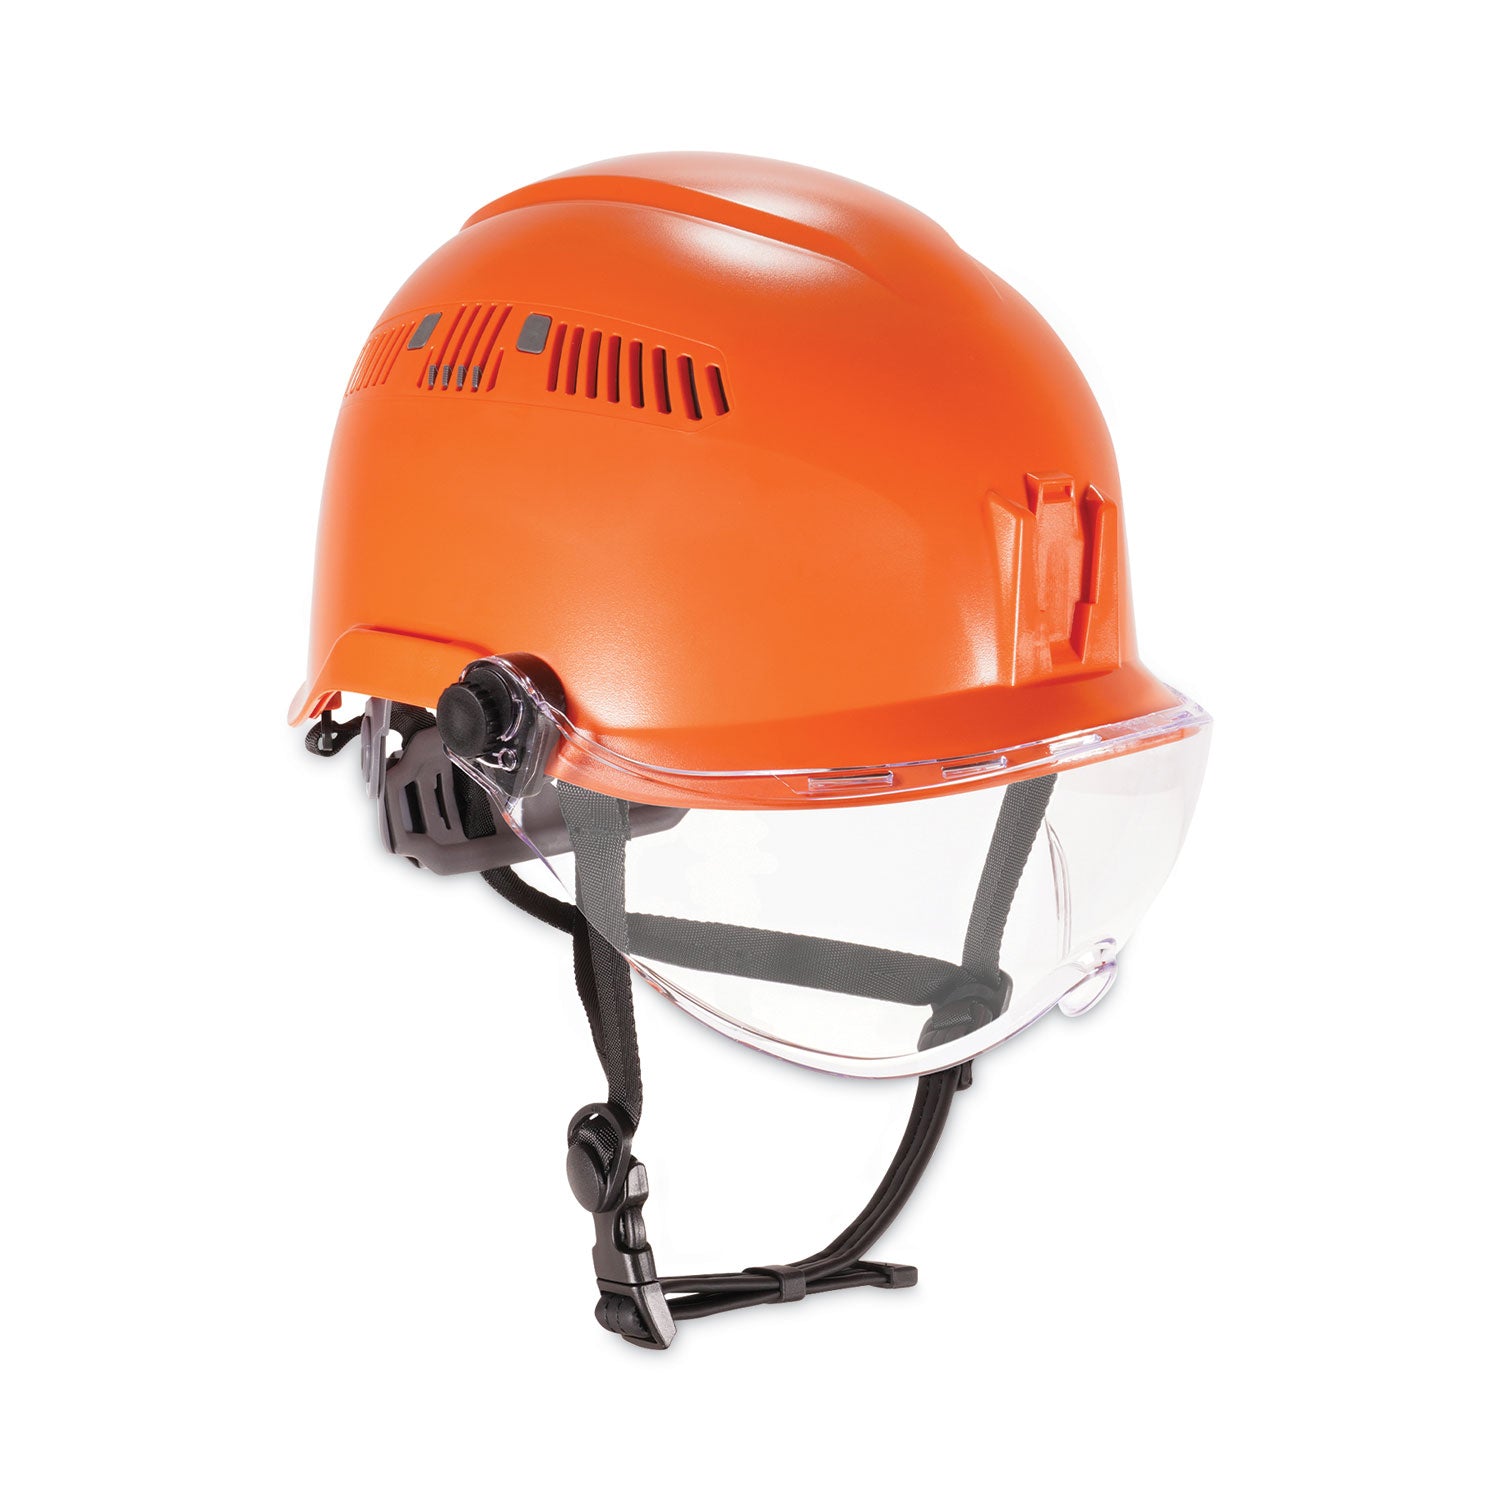 skullerz-8975v-class-c-safety-helmet-w-8991-visor-kit-clear-lens-6-pt-ratchet-suspension-orangeships-in-1-3-business-days_ego60221 - 1